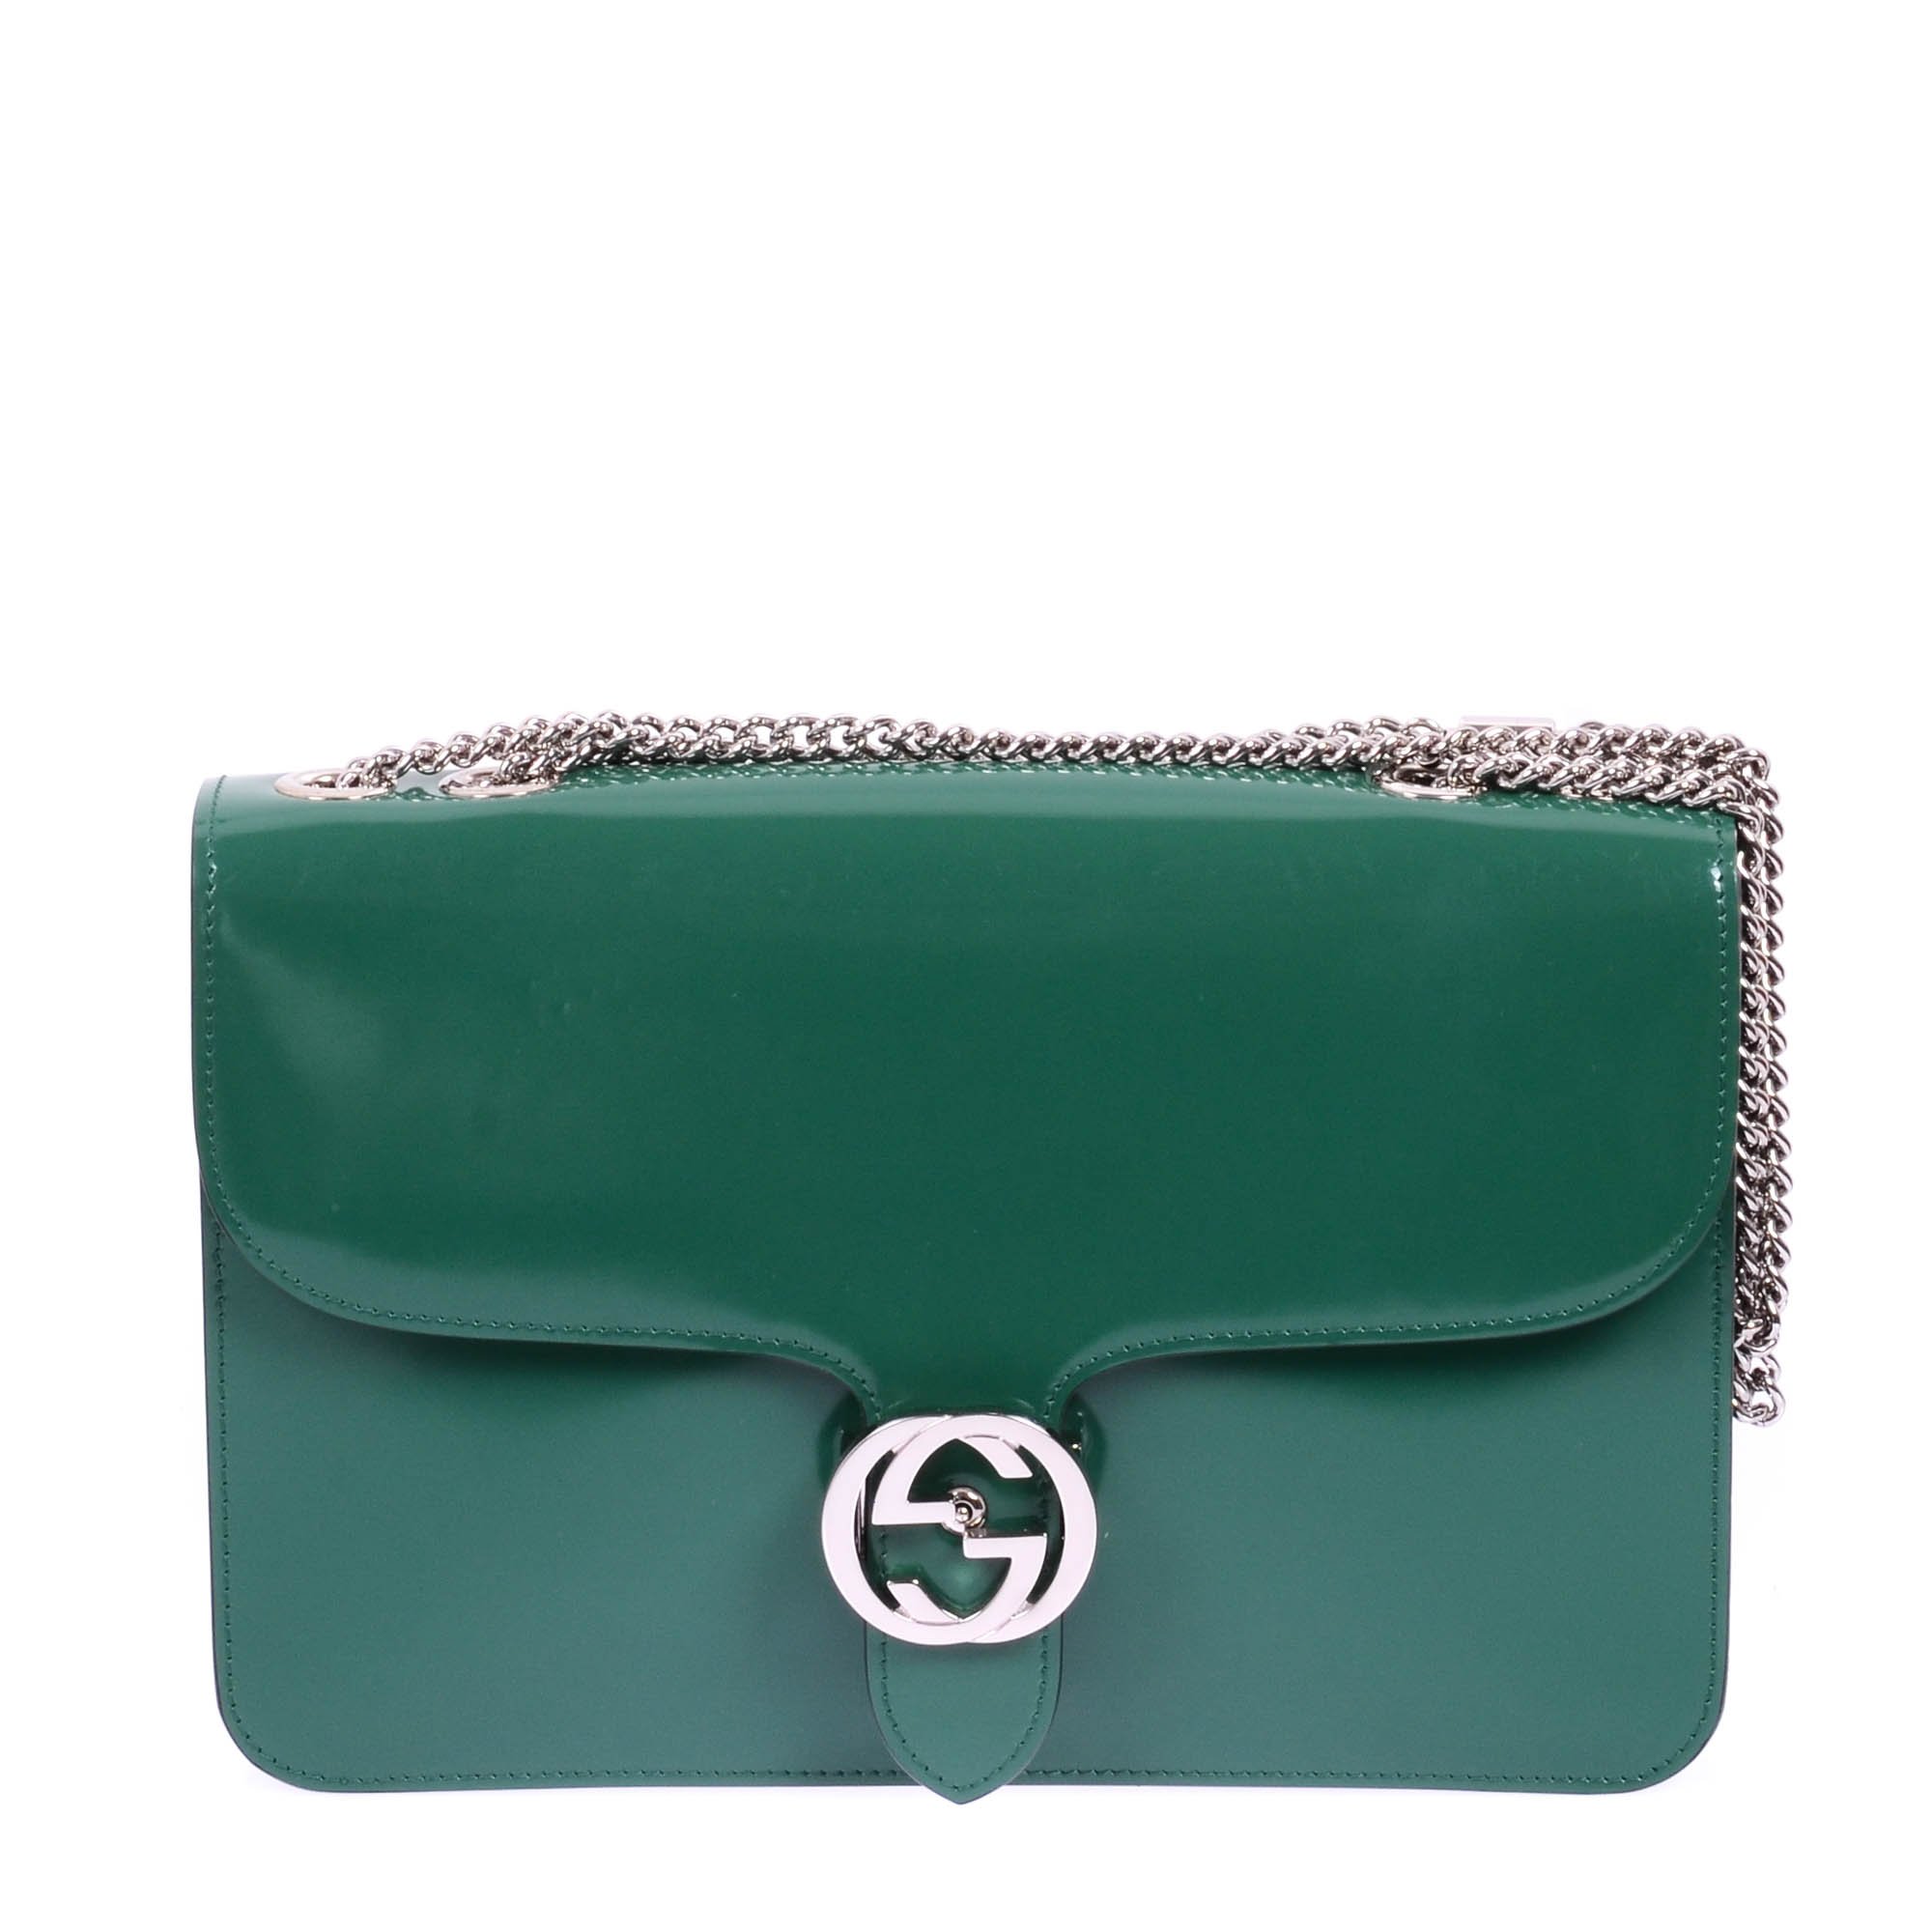 Gucci Green Patent Leather GG Shoulder Handbag